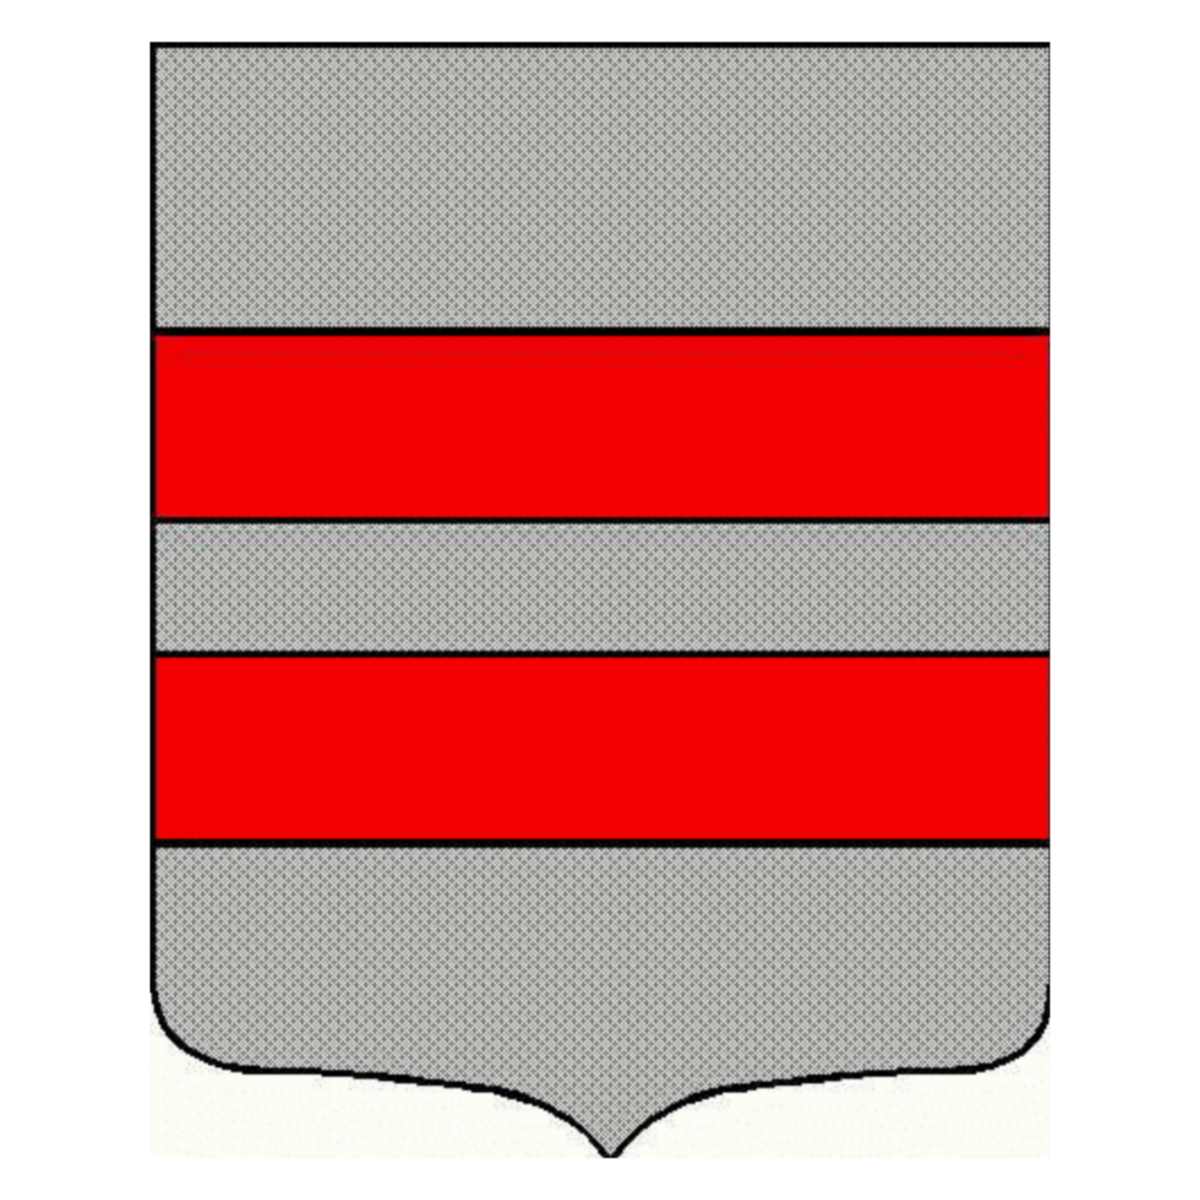 Wappen der Familie Ecker